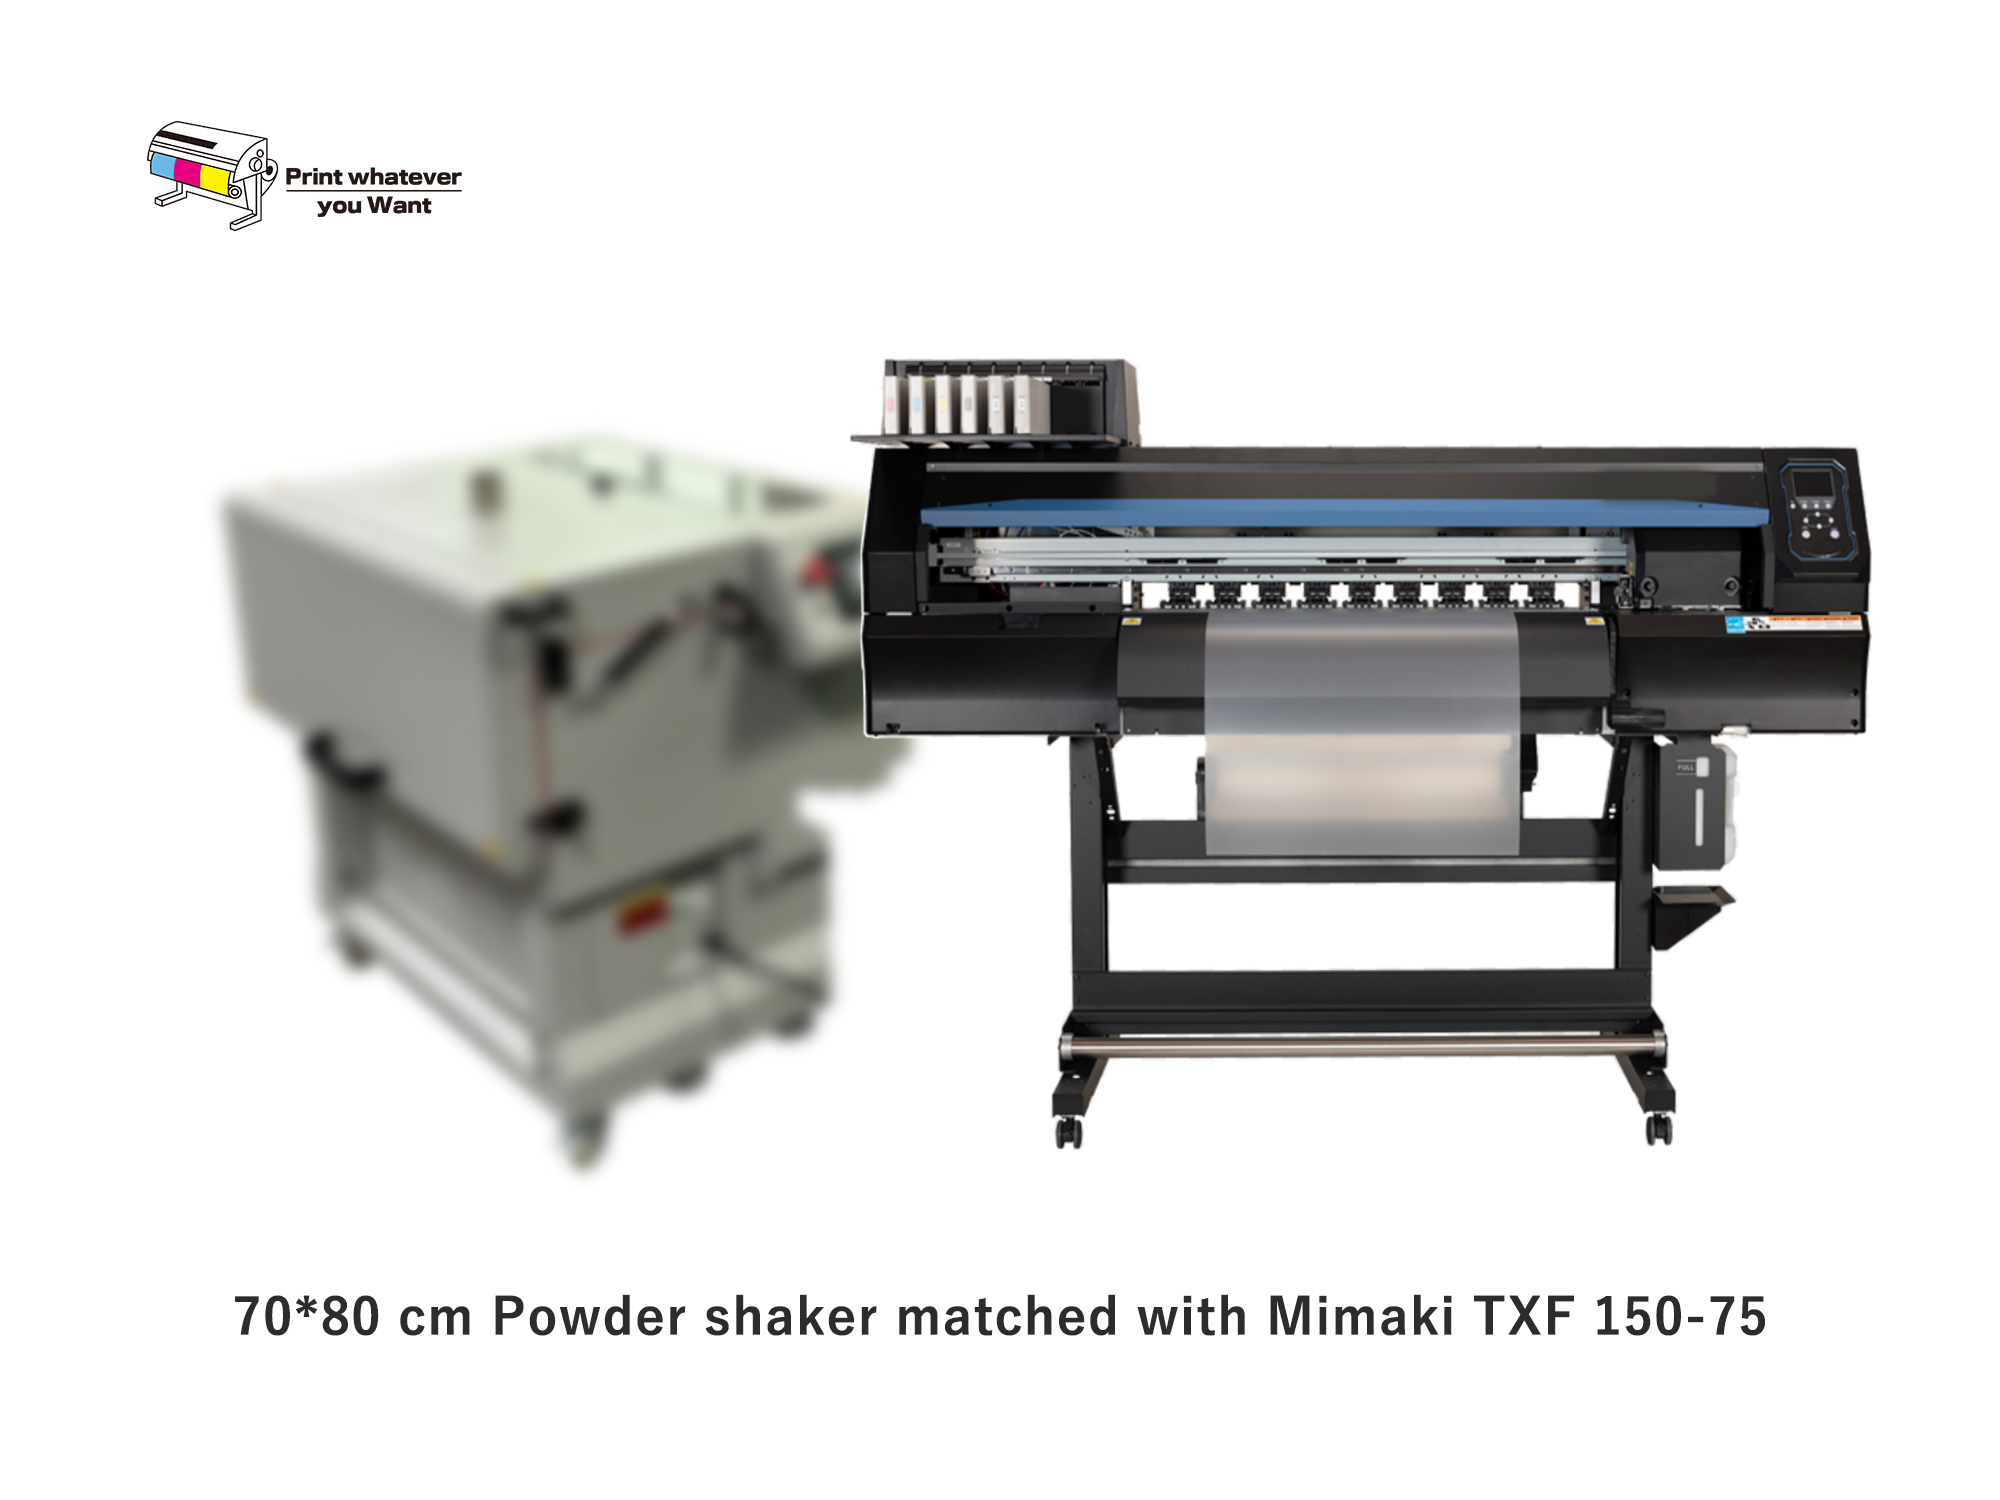 PrintWant novo agitador de pó combinado com Mimaki TXF 150-75